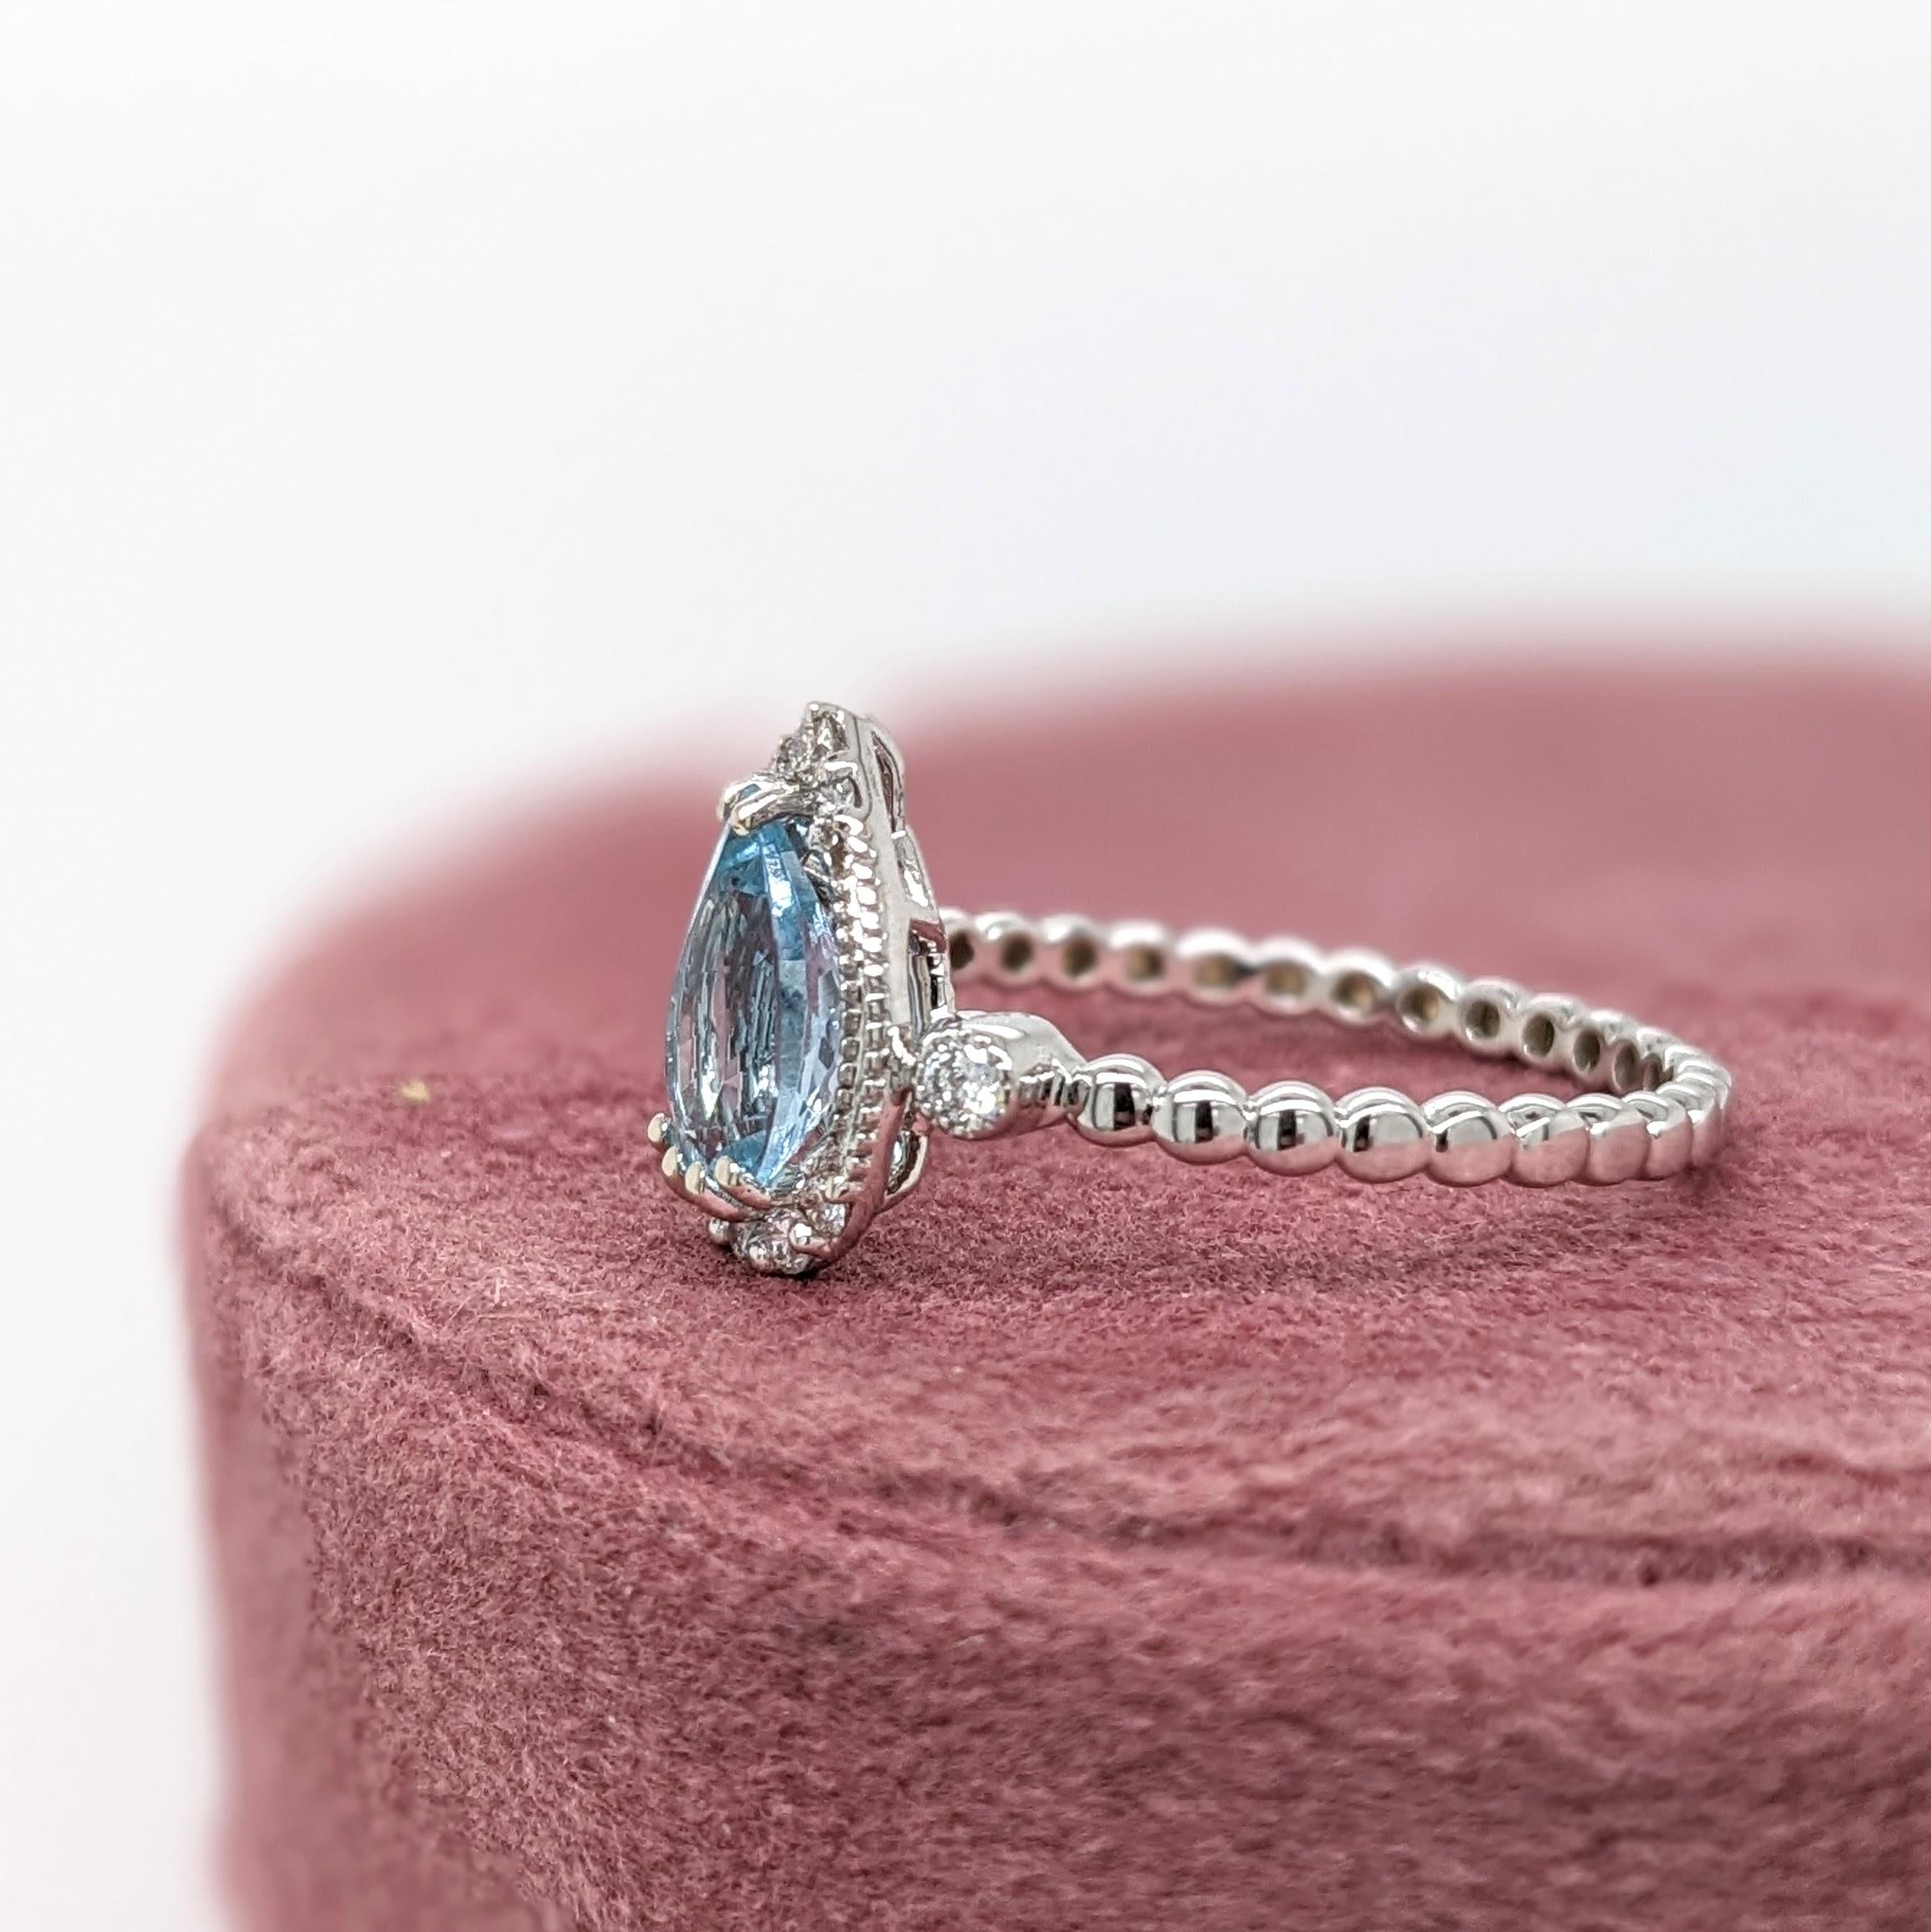 Aquamarine Ring w Natural Diamonds in 14K White Gold Pear cut 8x6mm